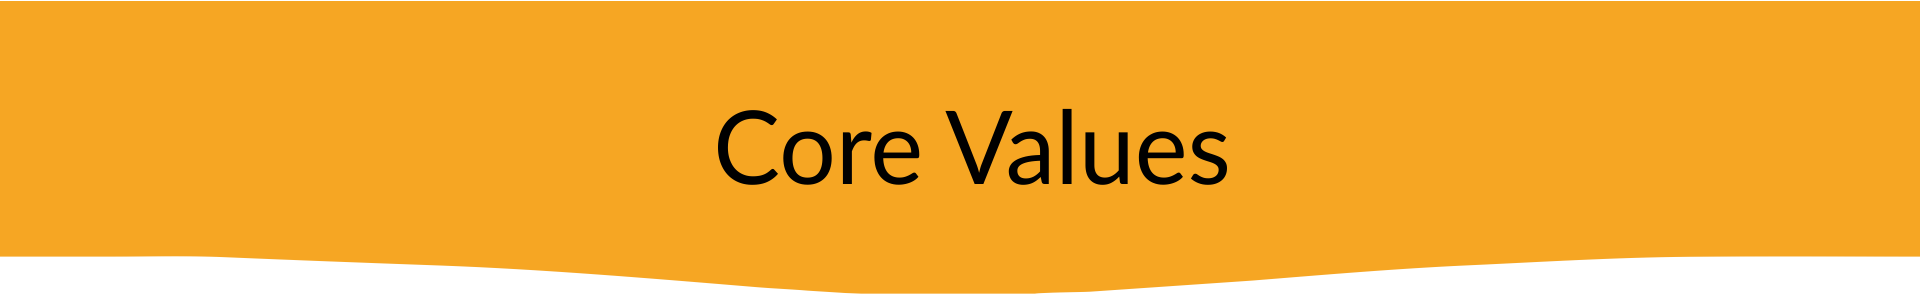 core-values1.png